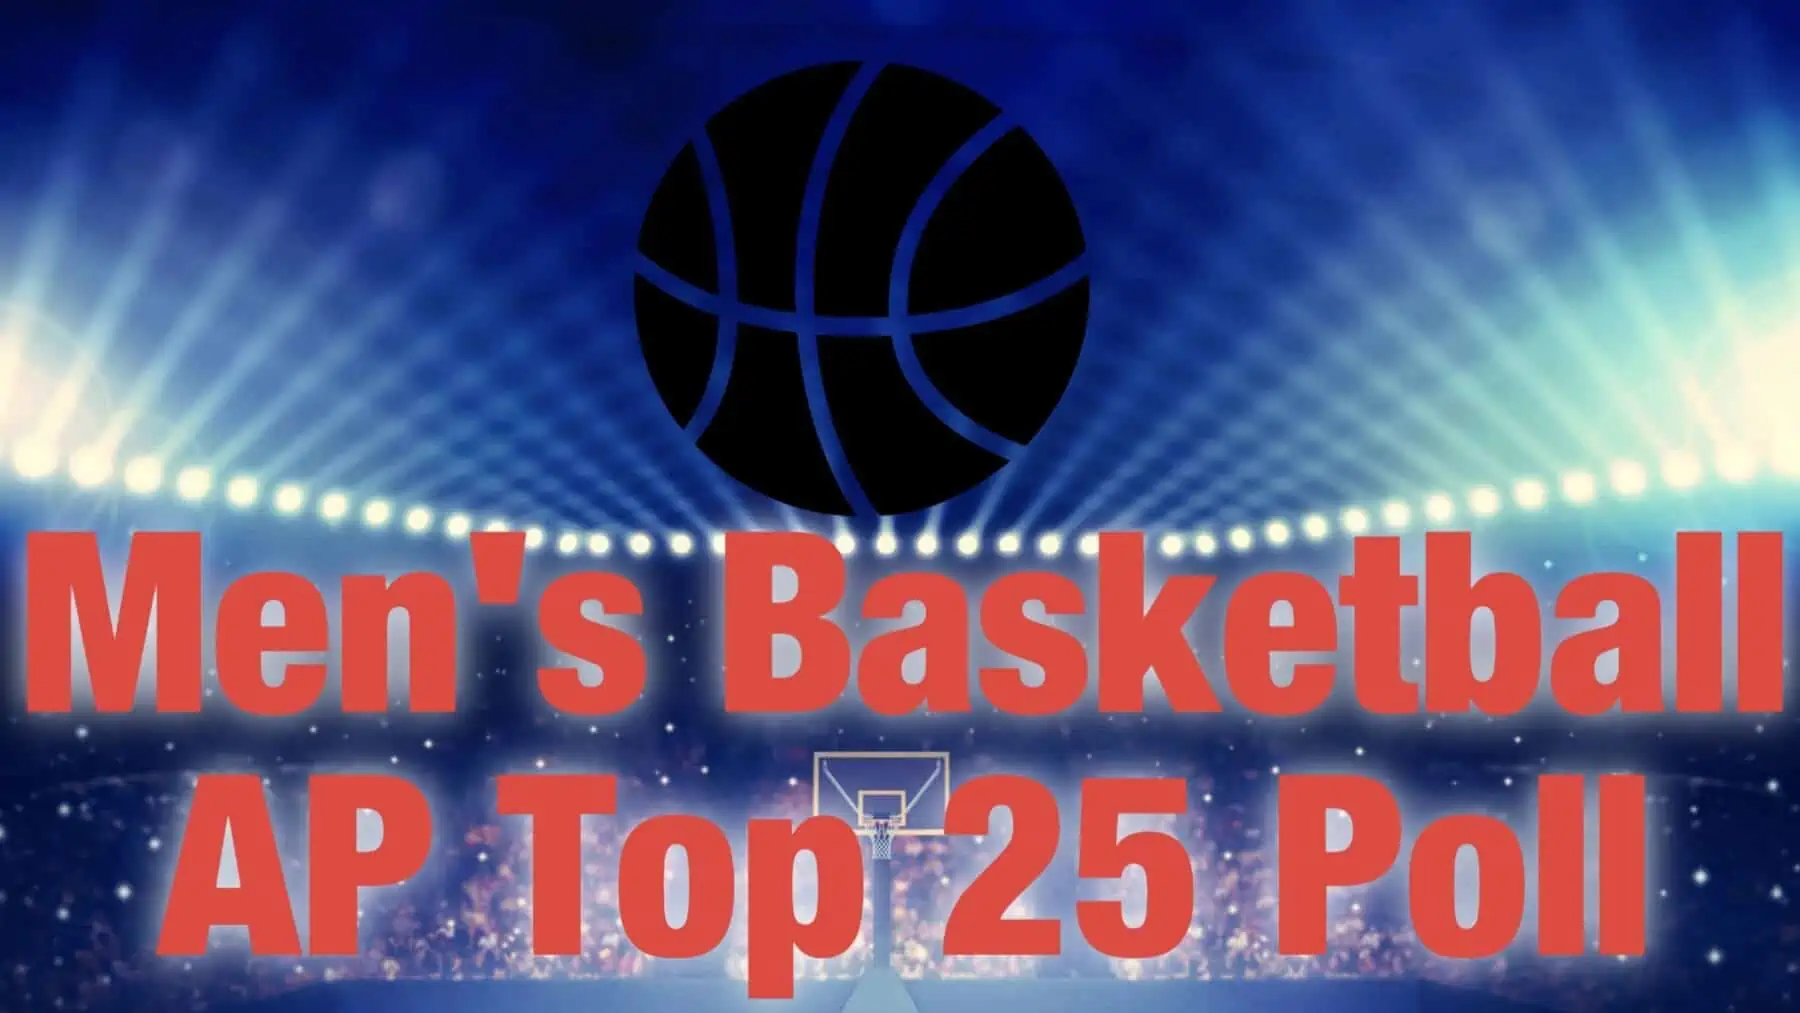 AP Top 25 men's basketball rankings latest